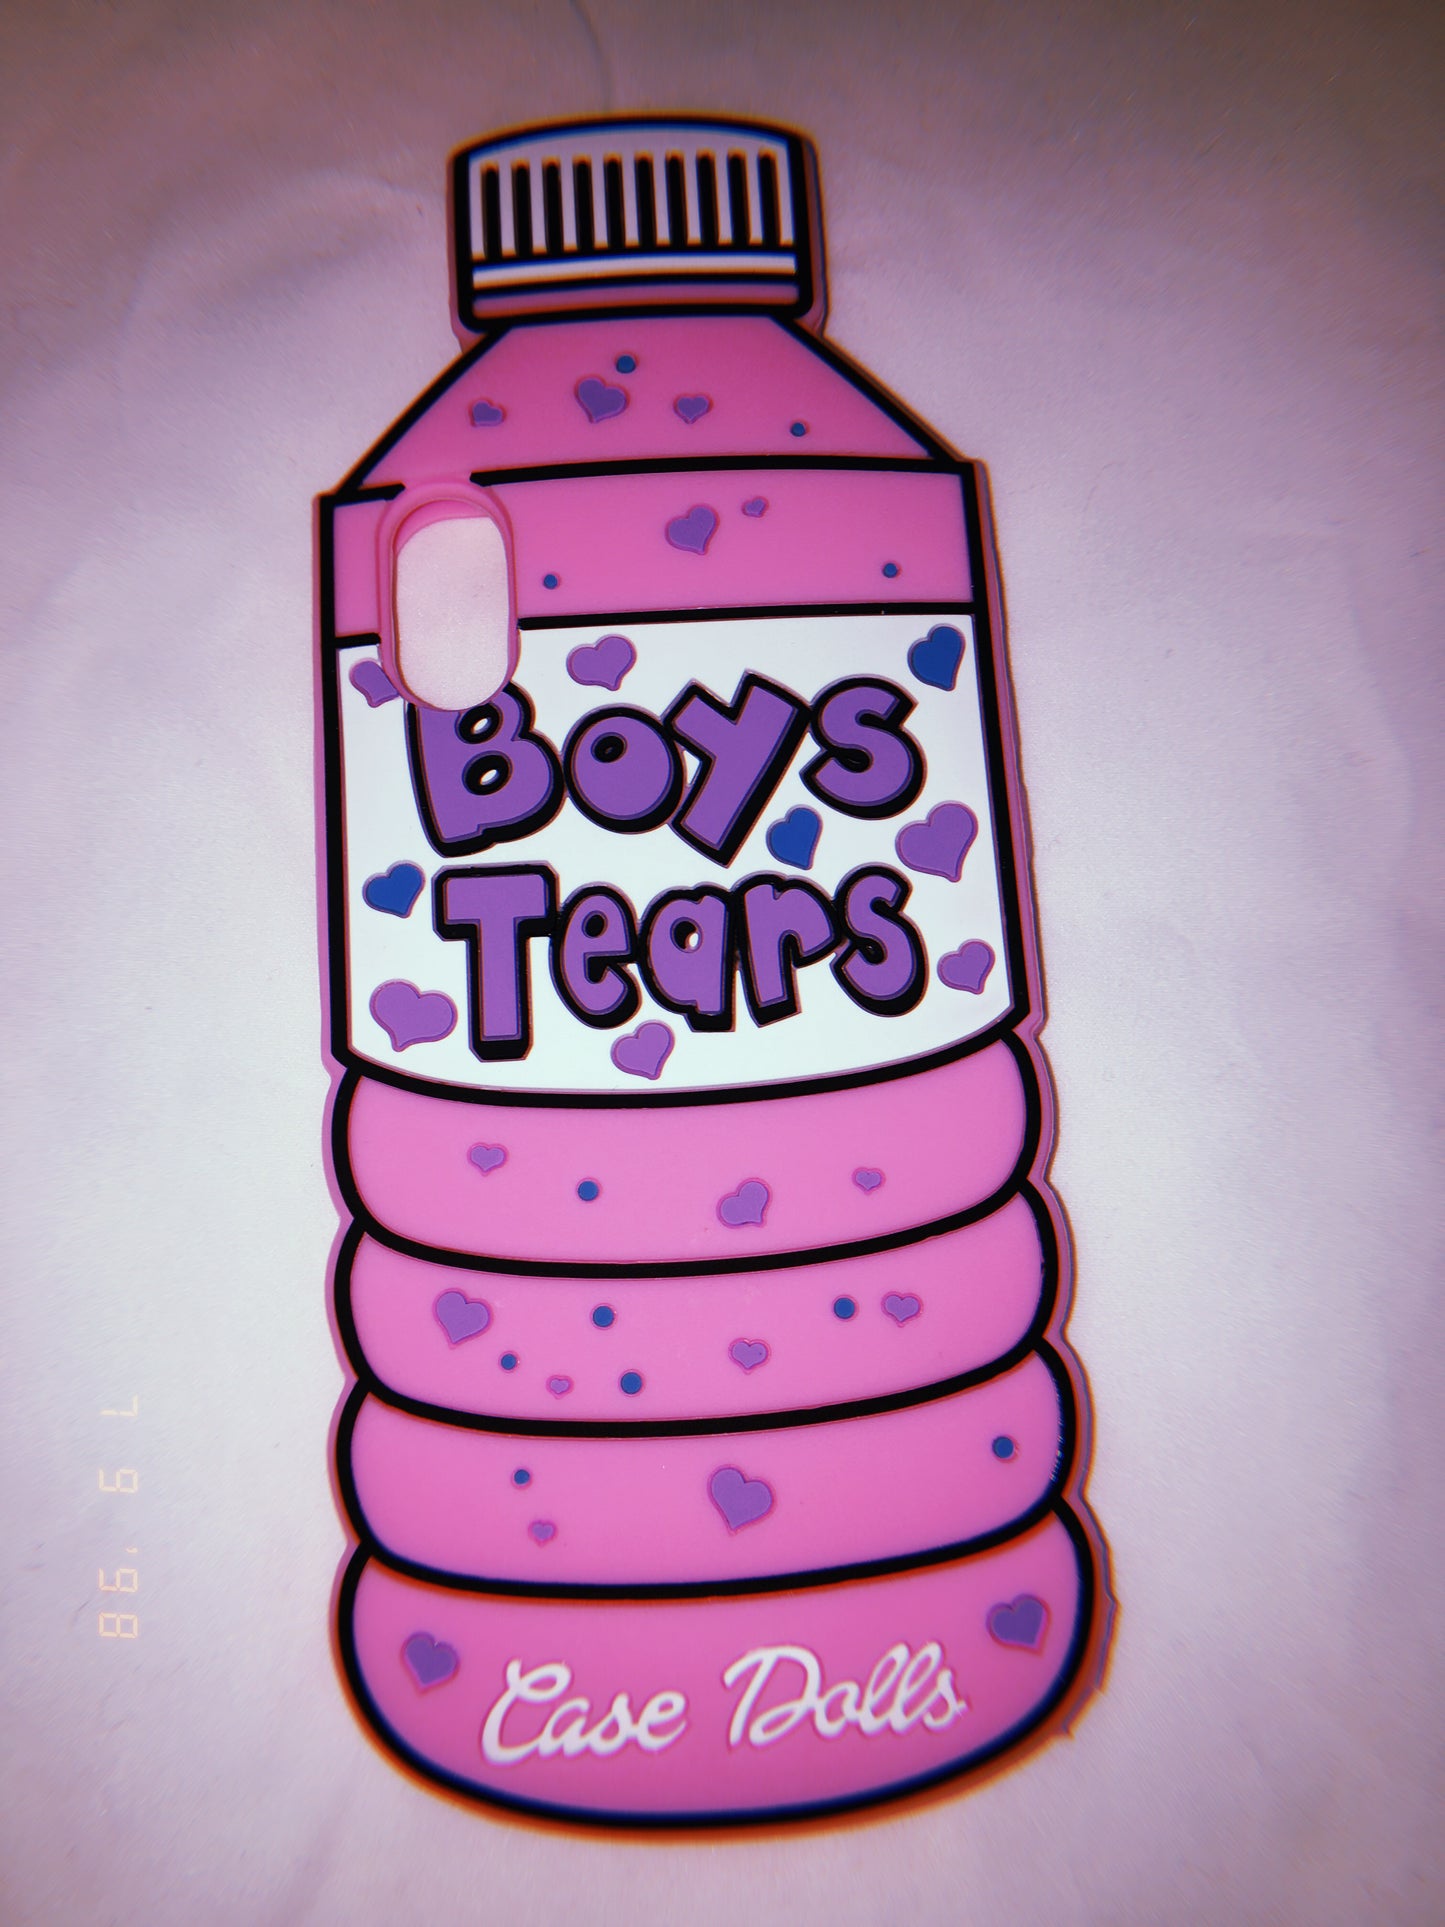 Boys Tears set